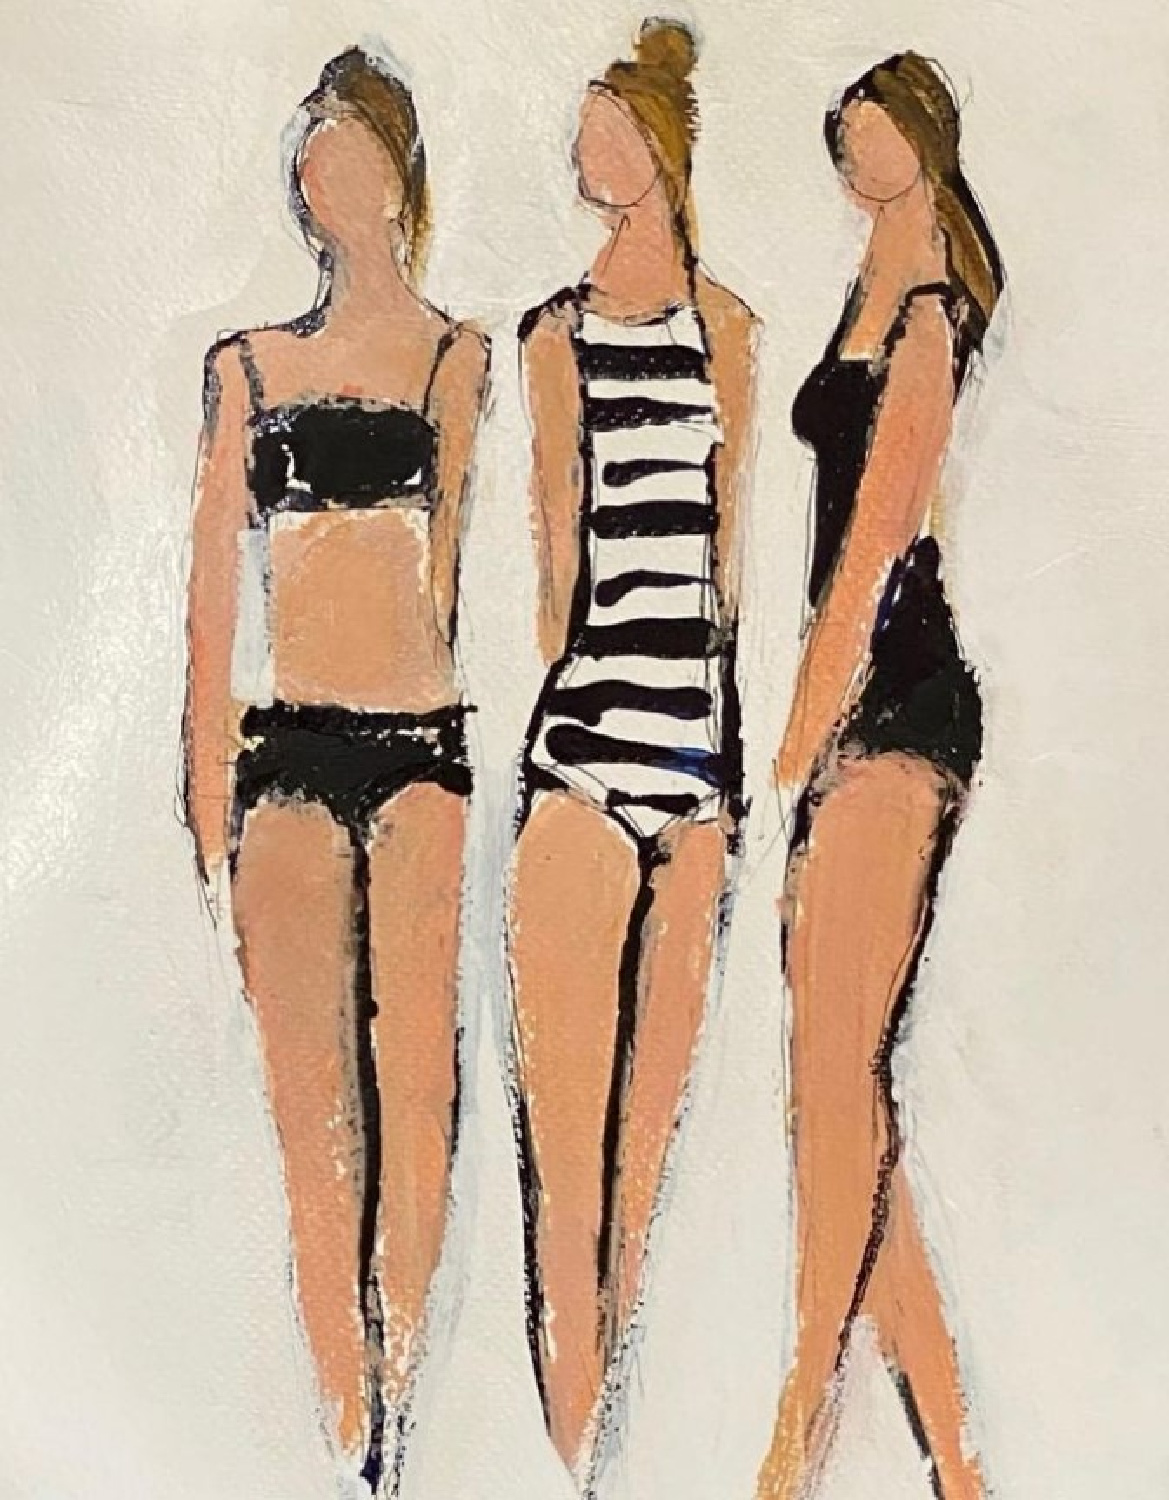 Holly Irwin fine art of three women in swimsuits on Hello Lovely Studio.